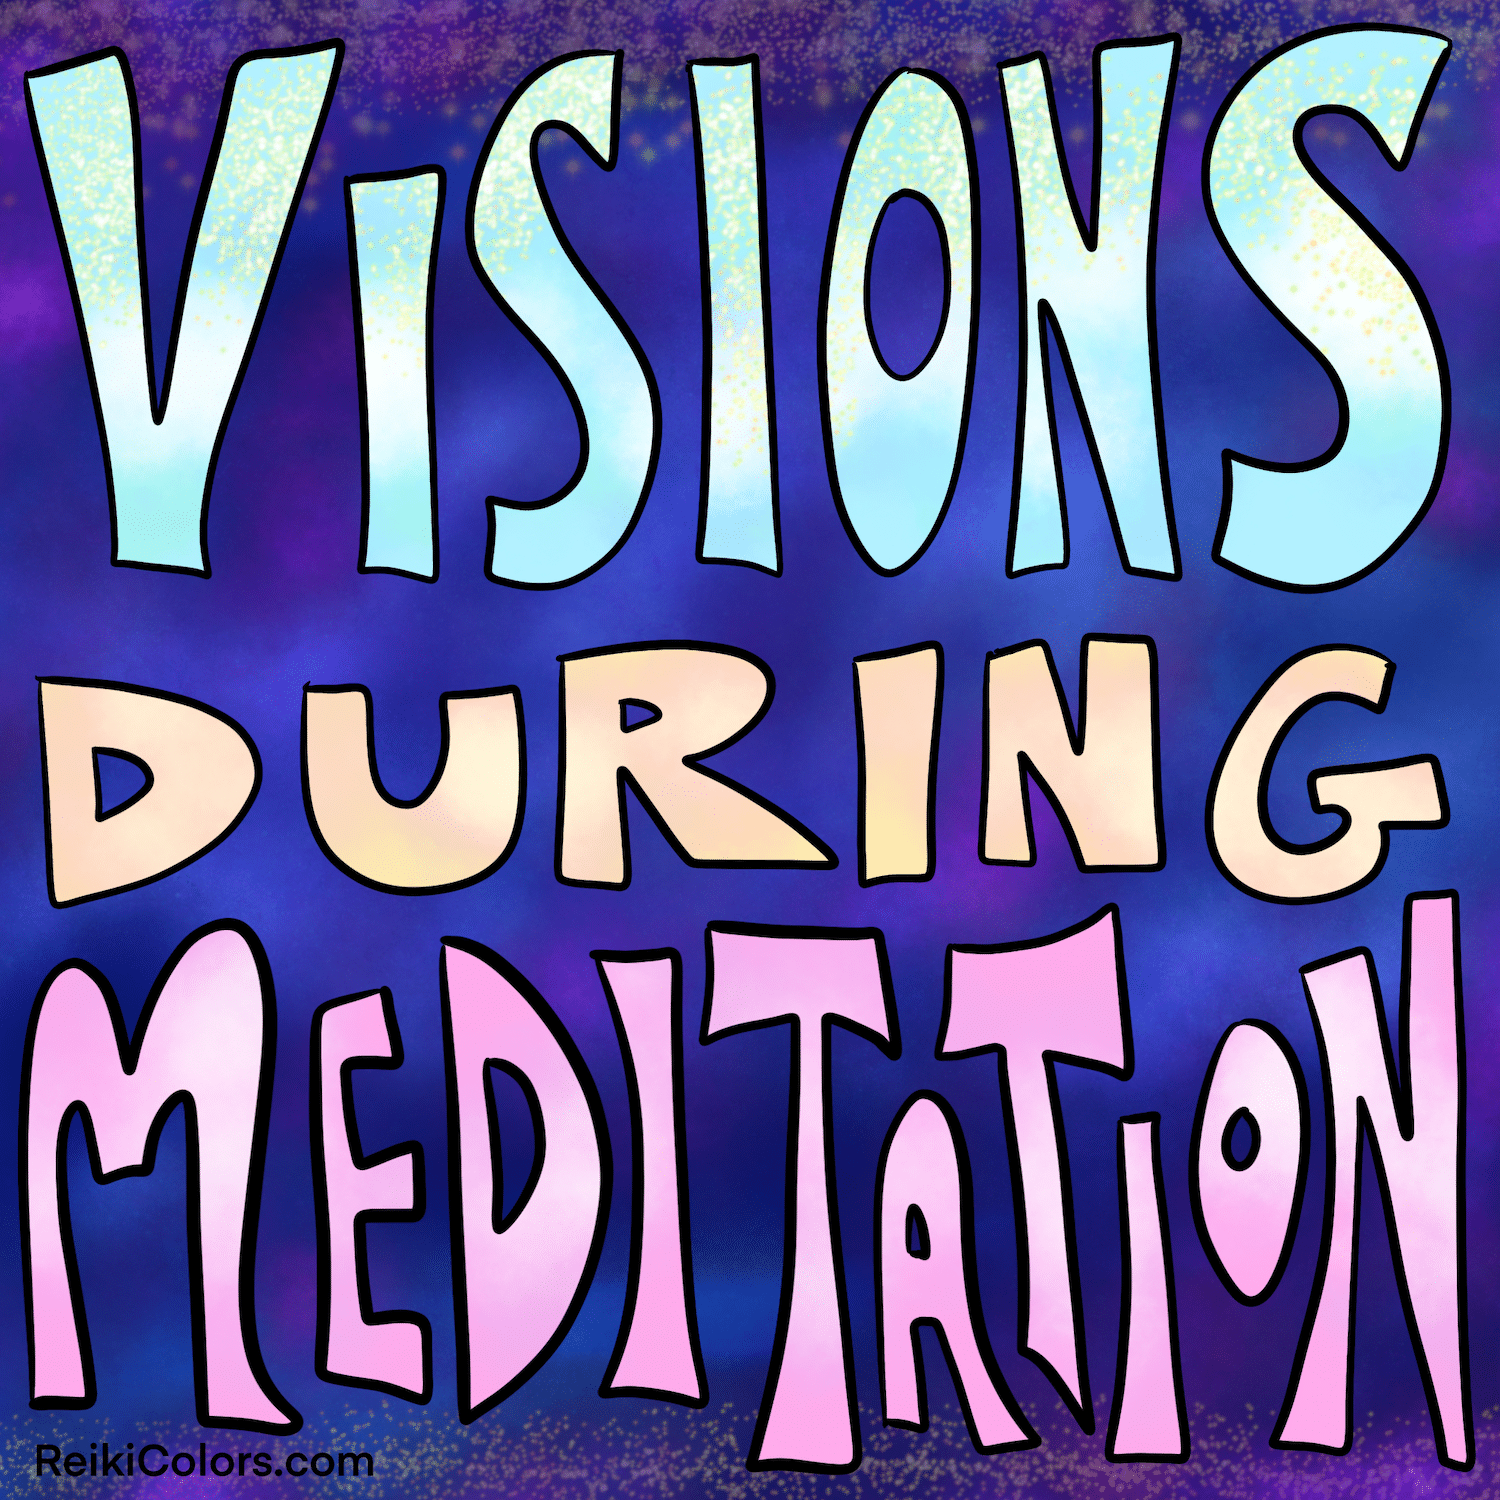 Visions during meditation